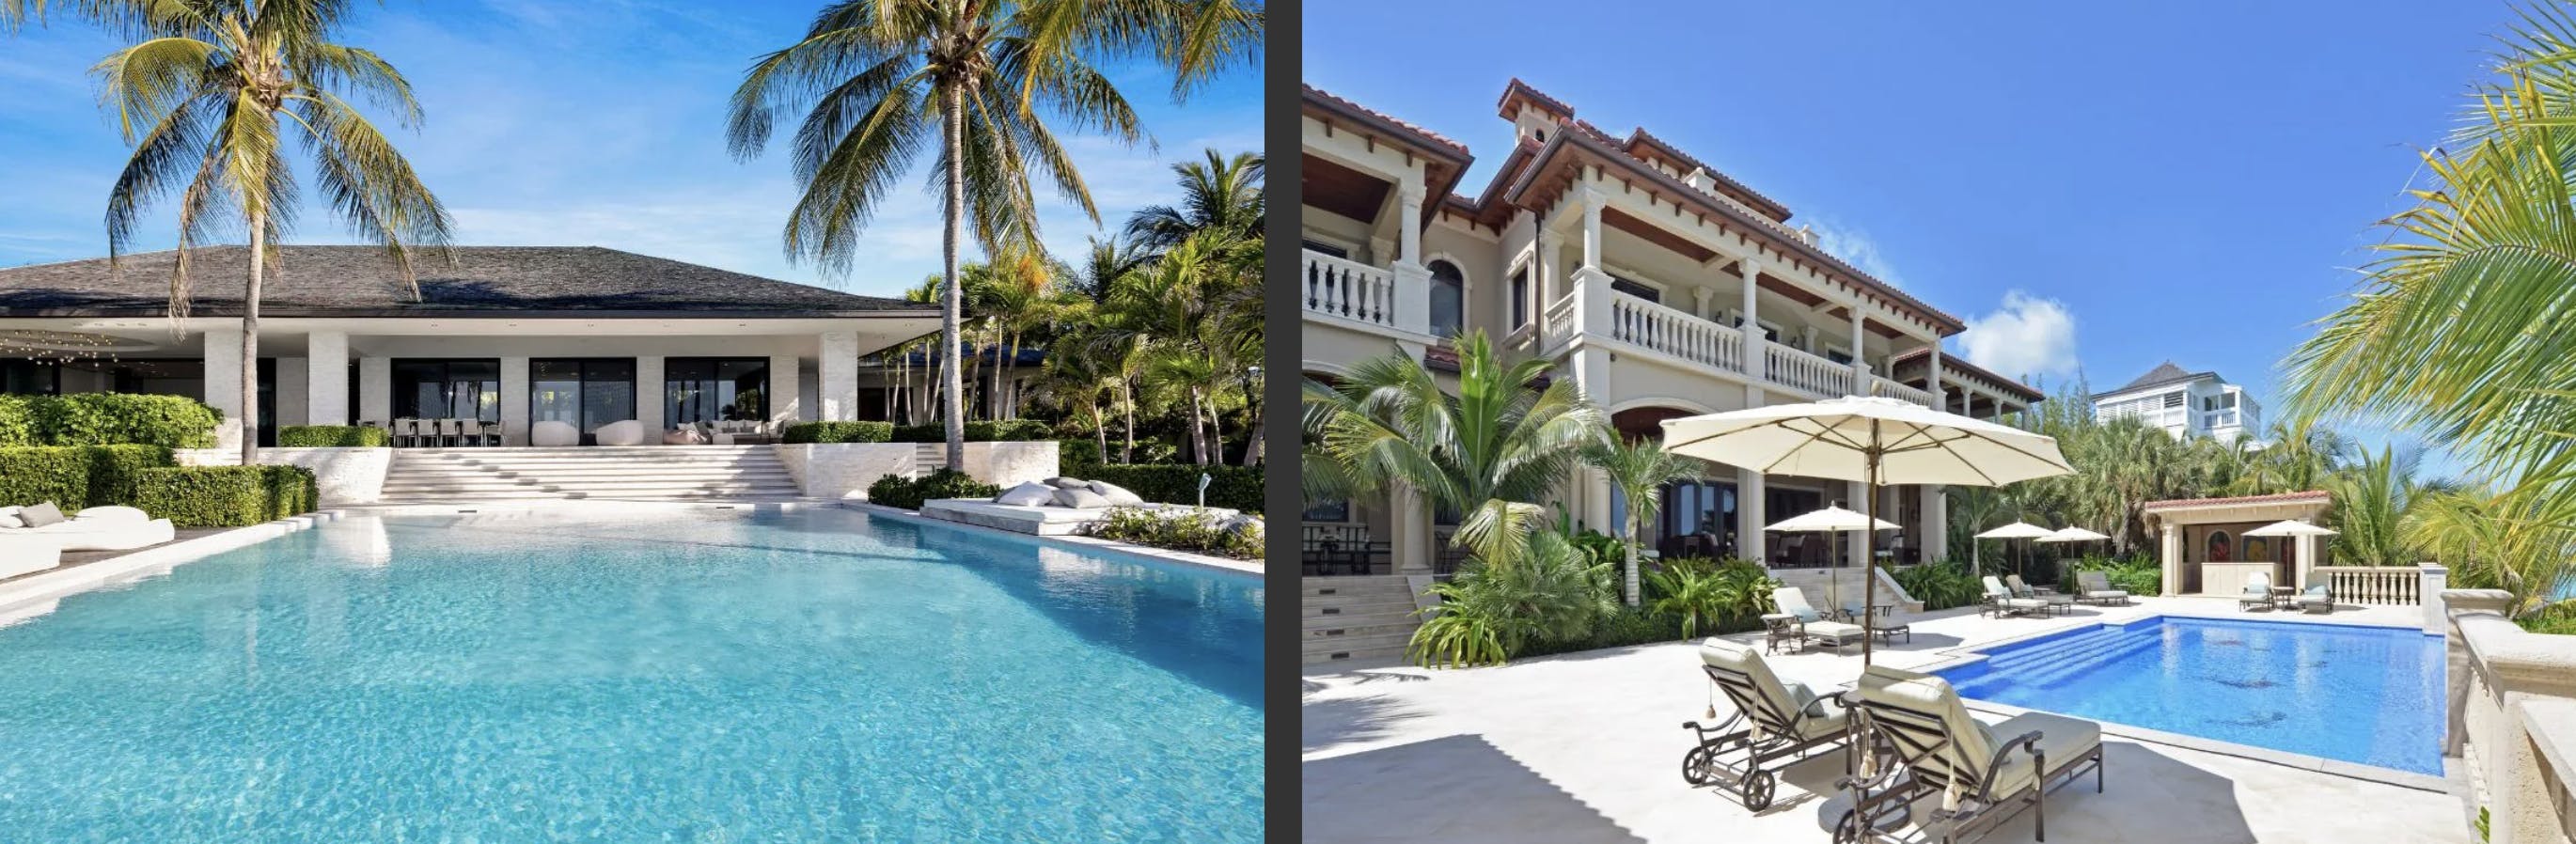 Properties for Sale in Nassau Bahamas